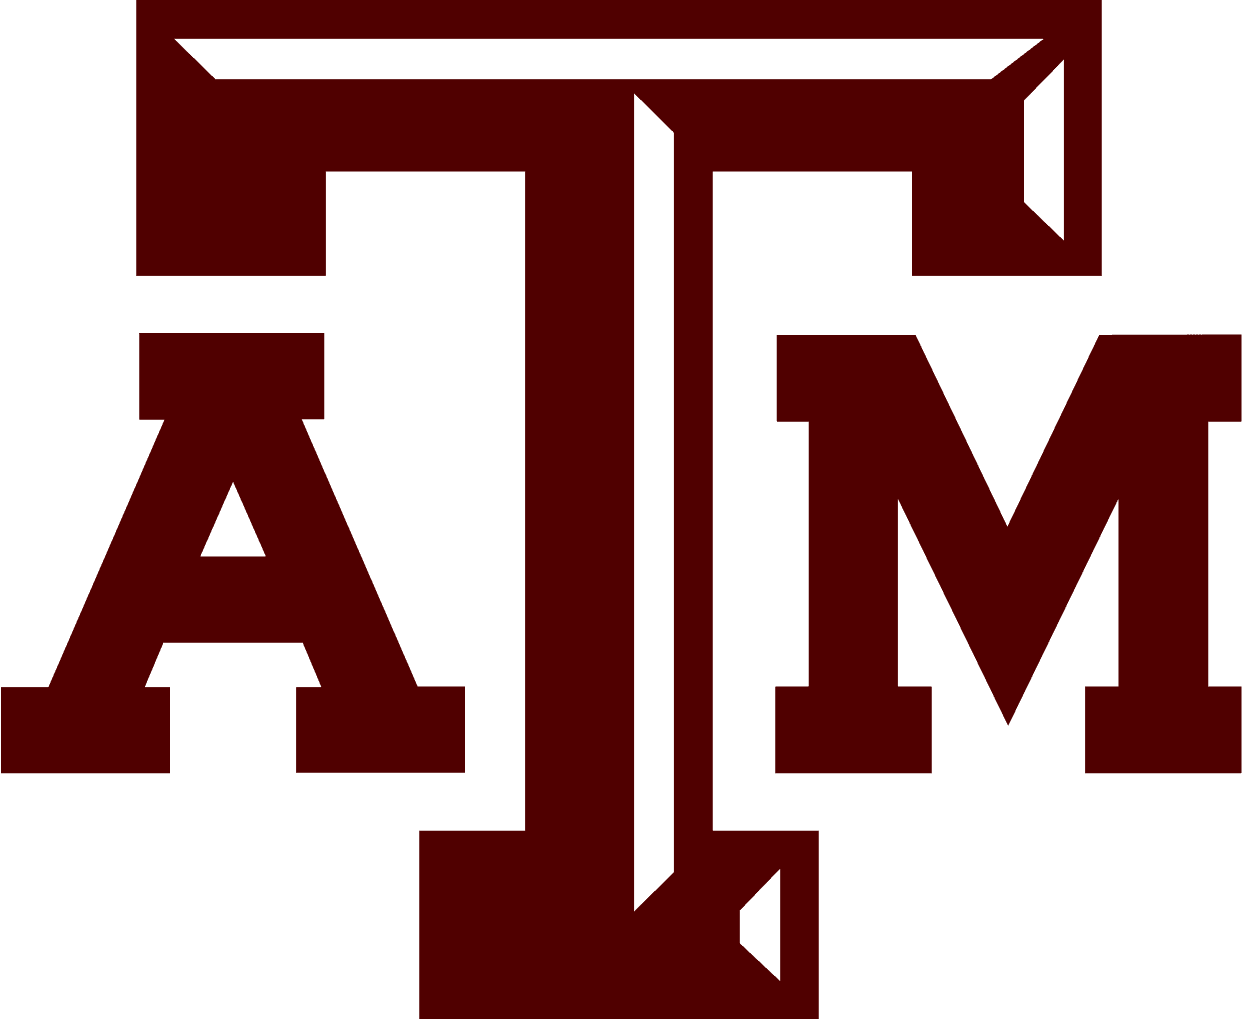 1246px Texas AM University logo svg